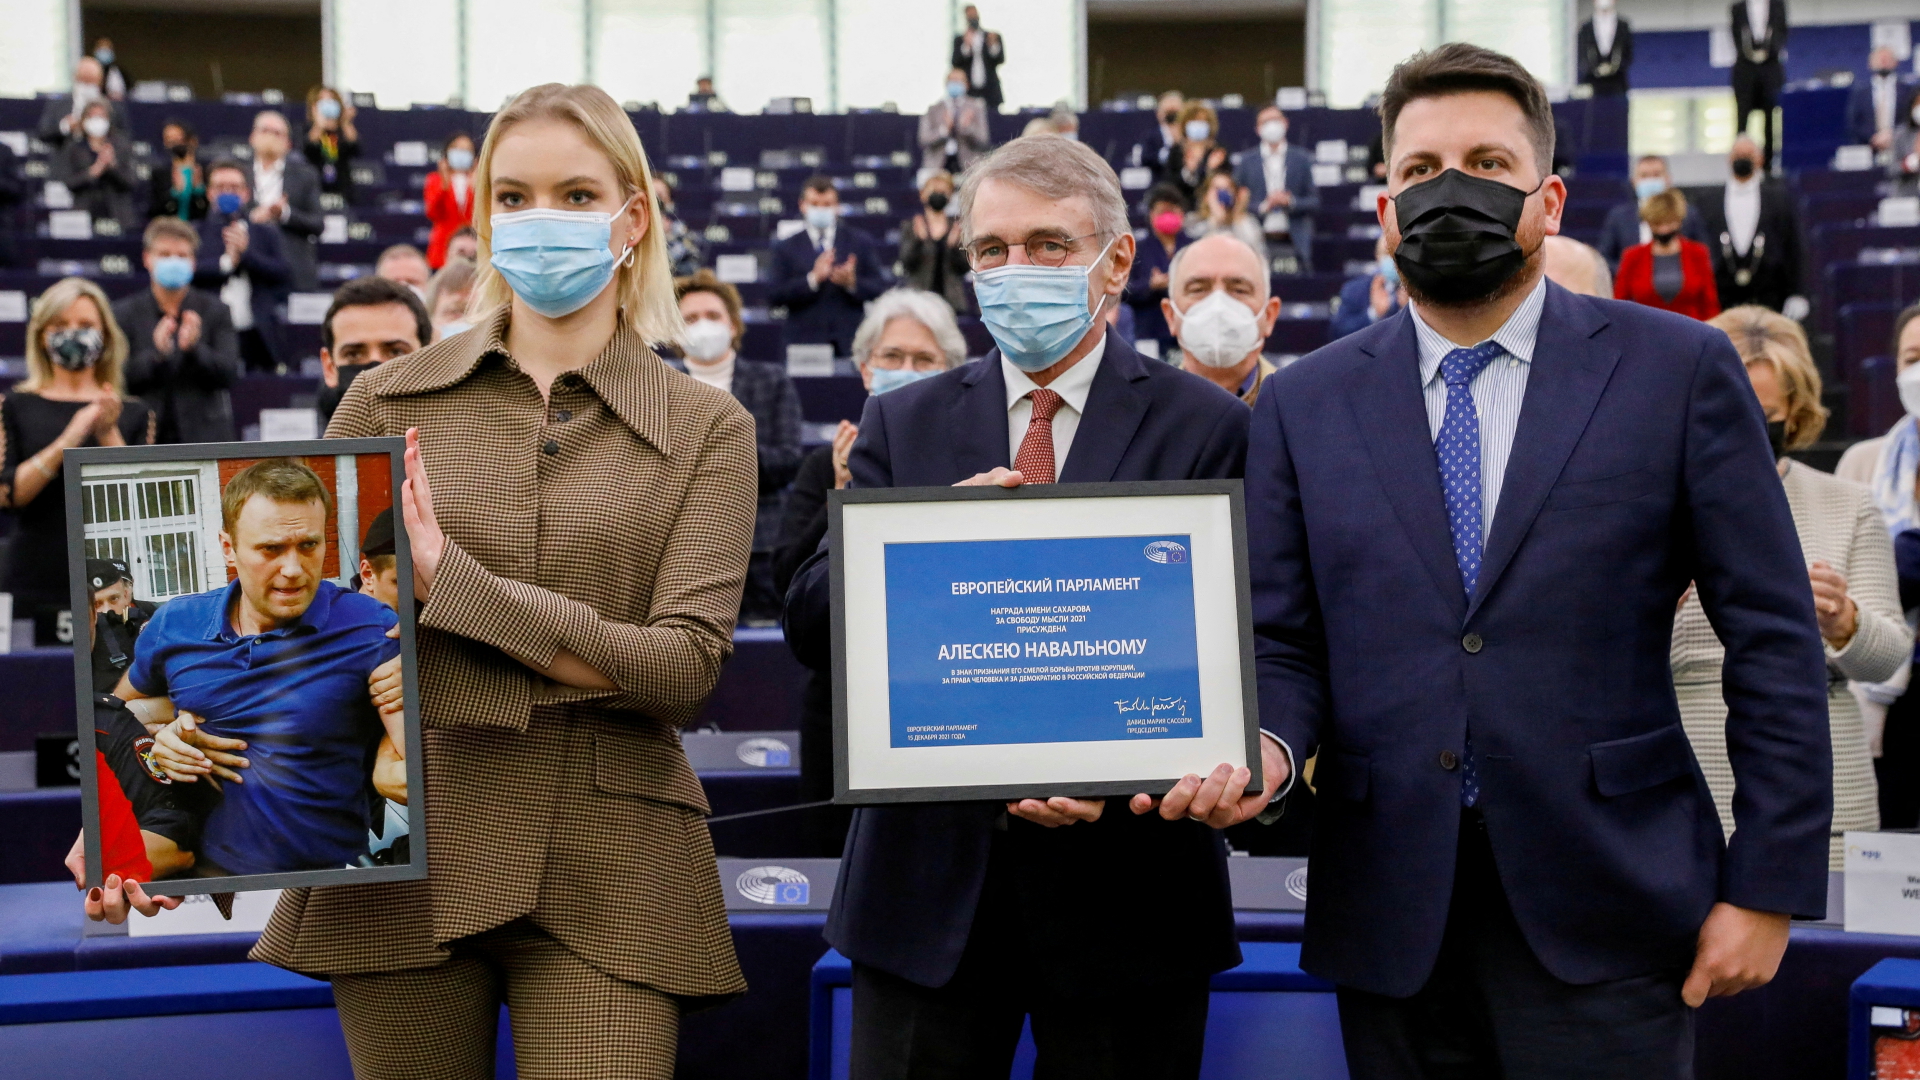 EU-Parlament: Nawalnys Tochter nimmt Sacharow-Preis entgegen